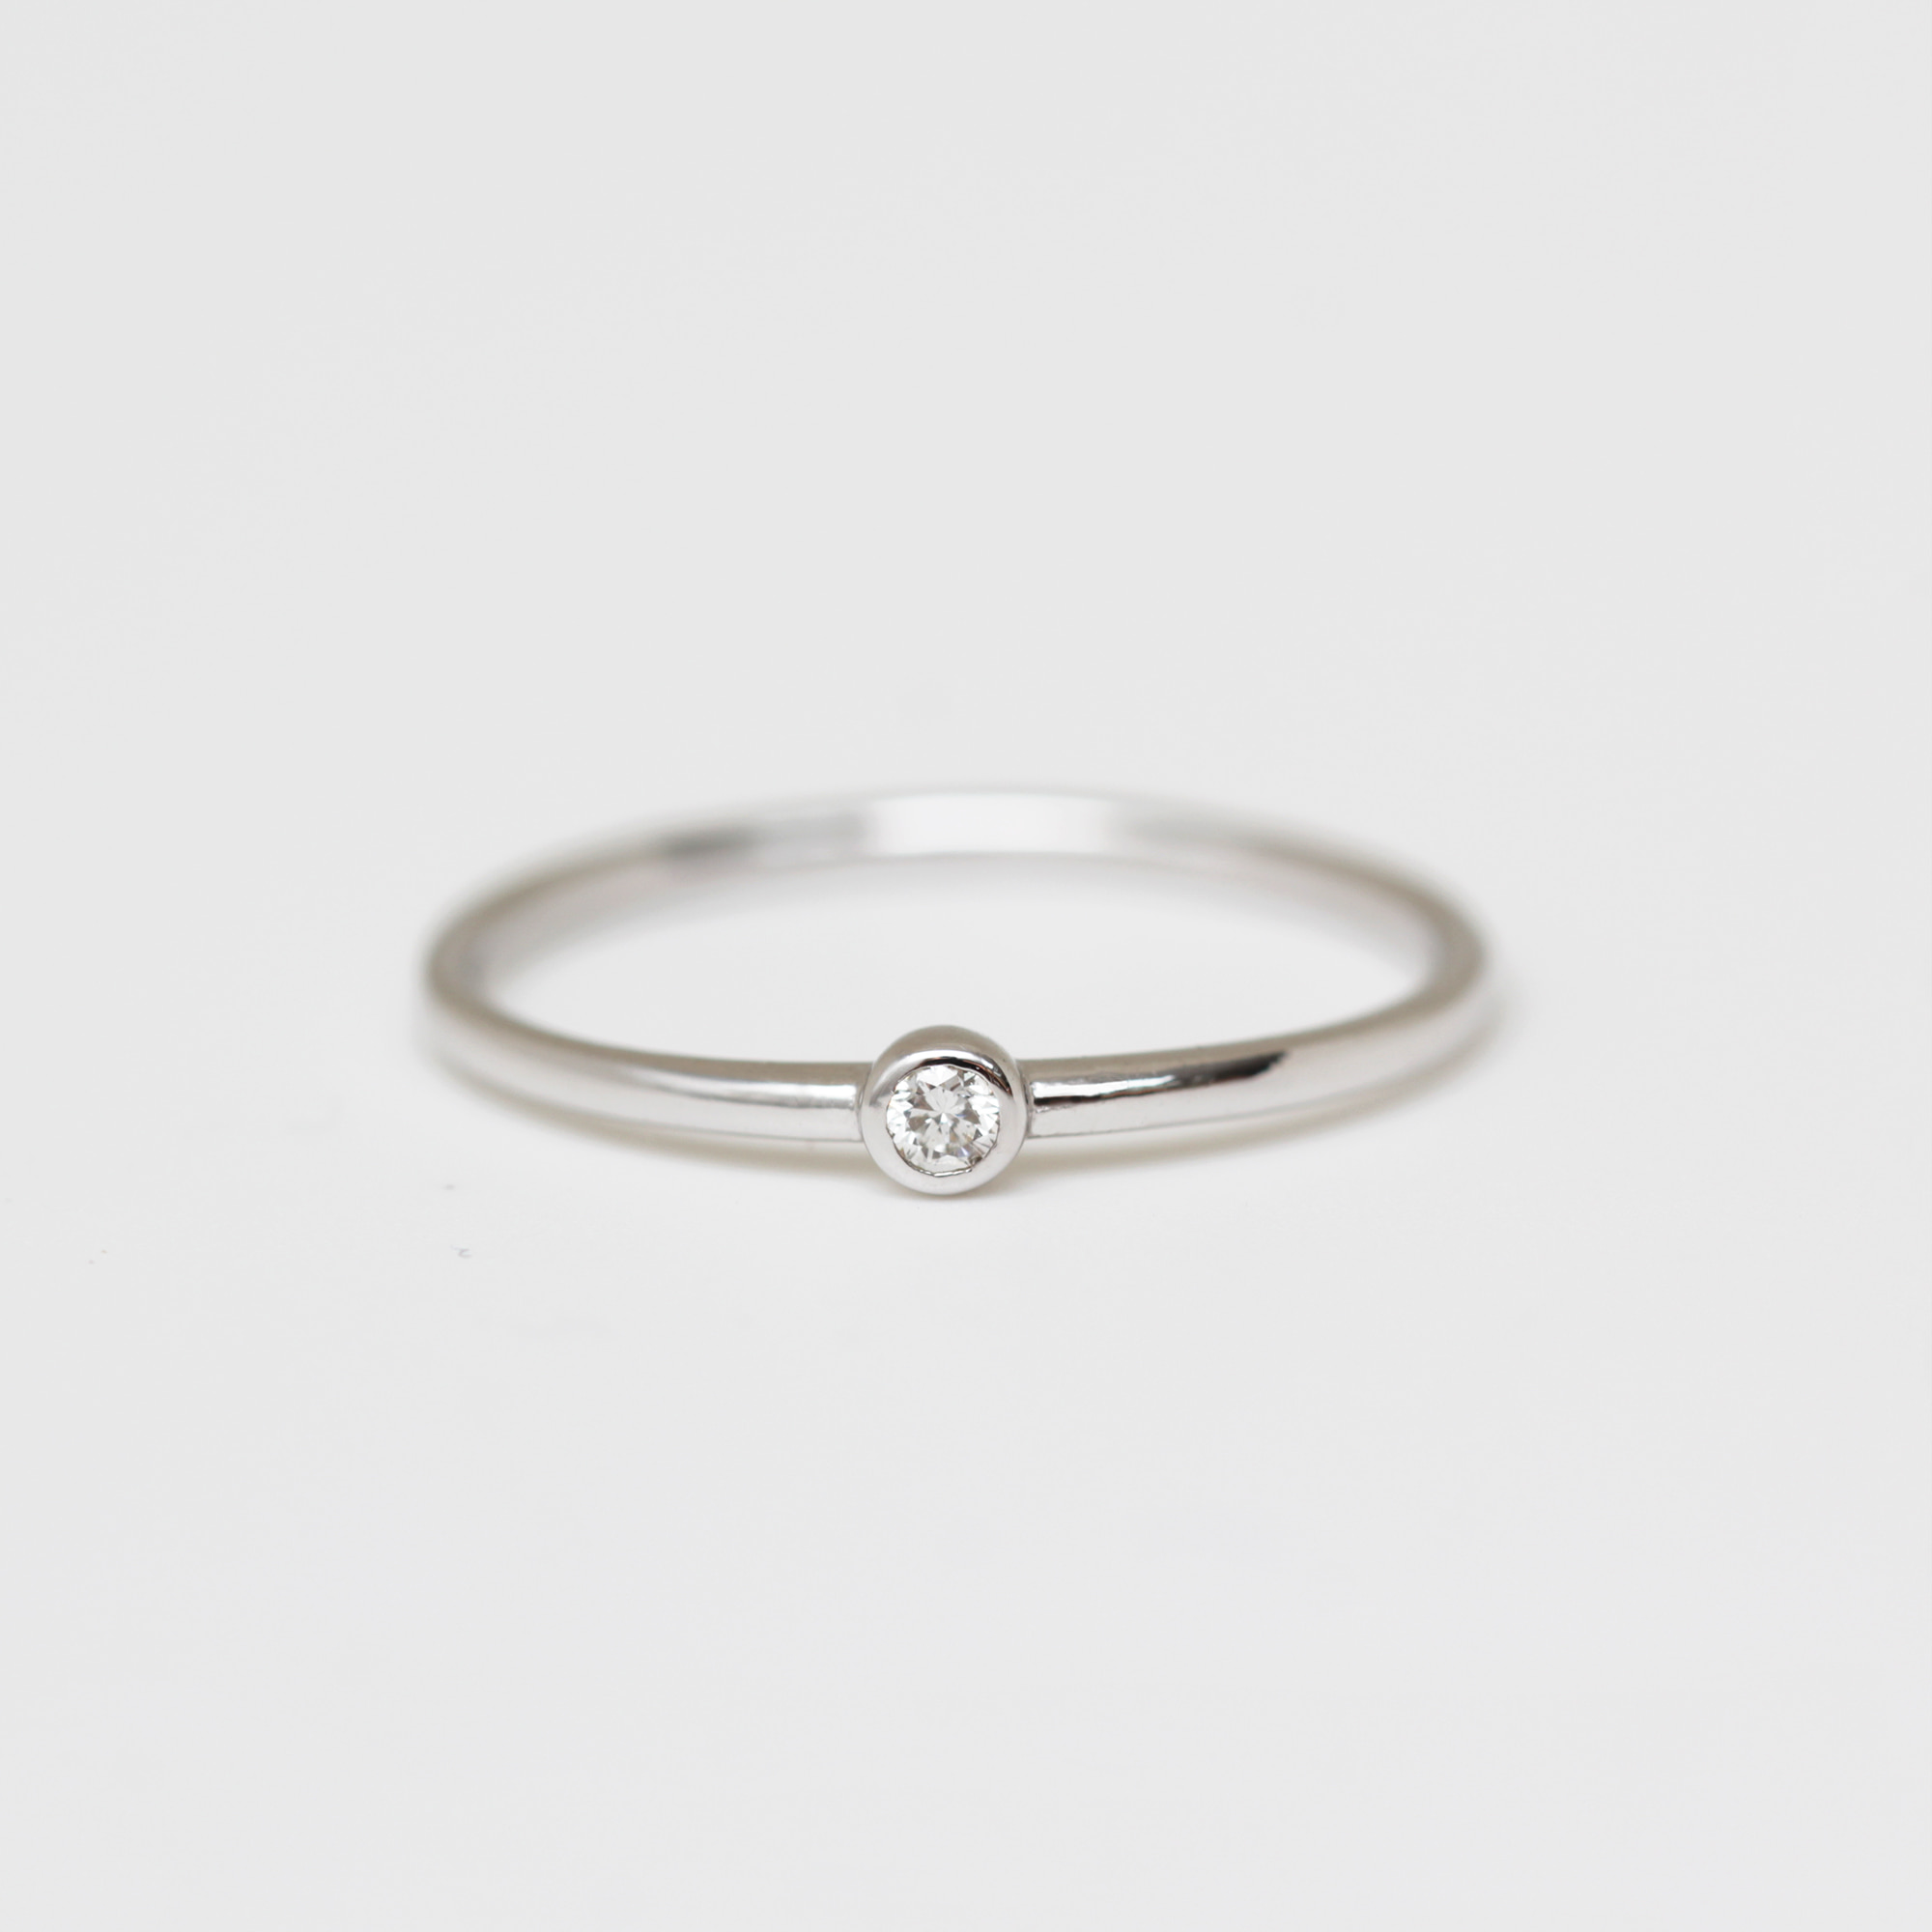 Top quality white diamond bezel setting ring